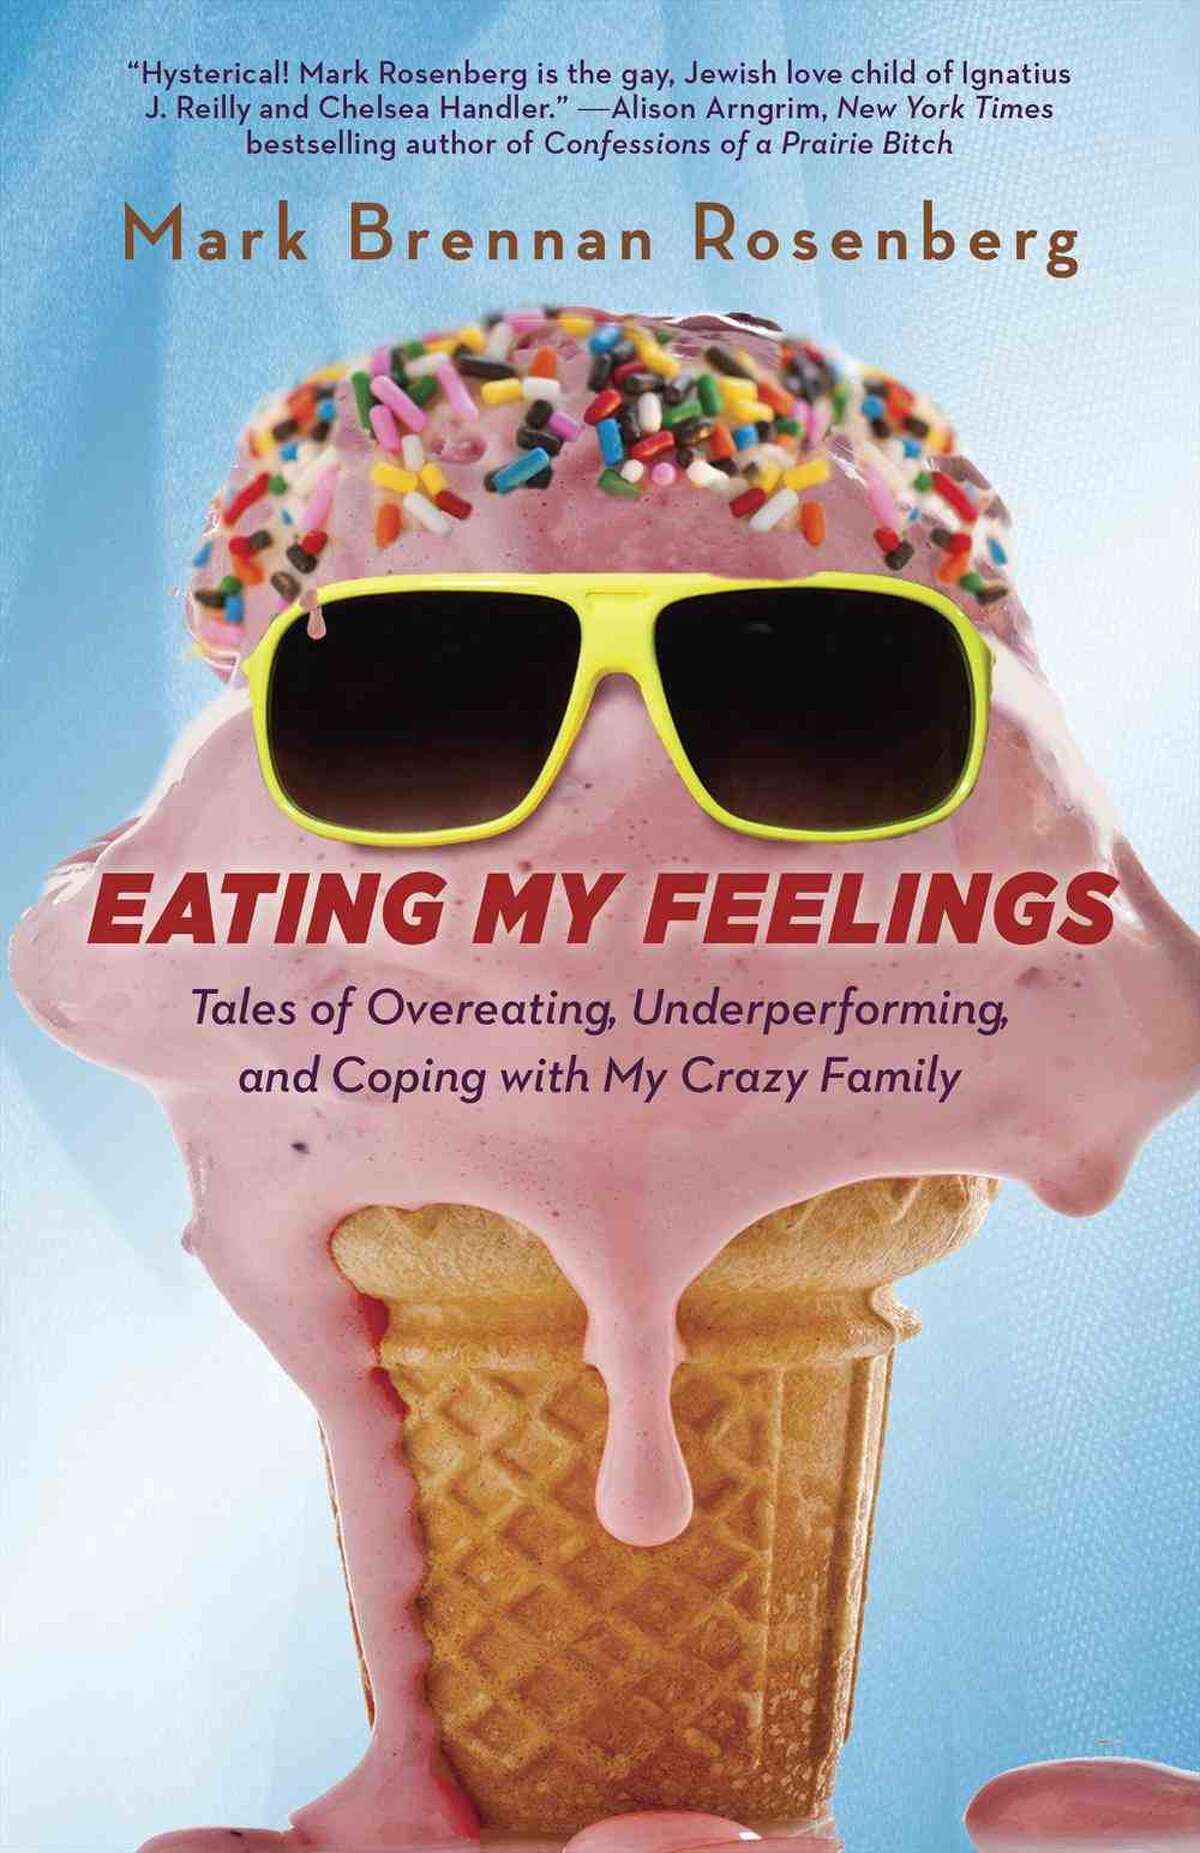 "Eating My Feelings" by Mark Brennan Rosenberg